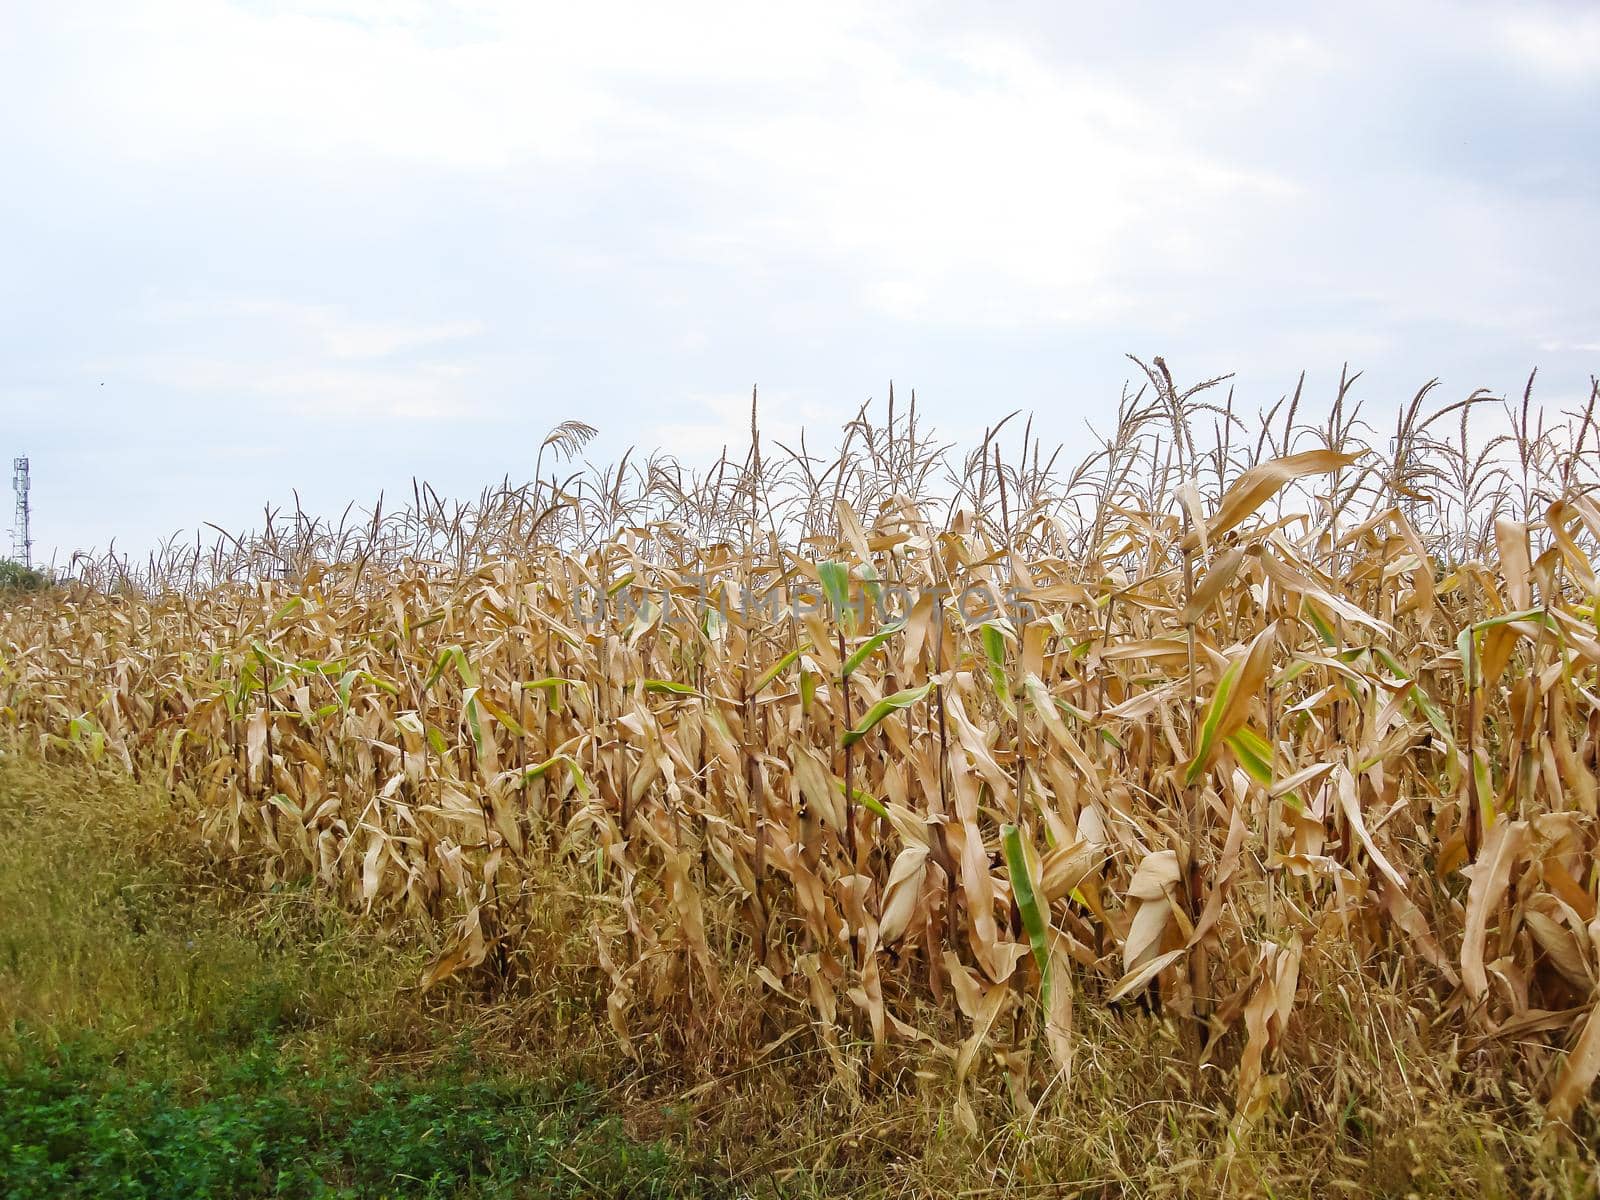 Dry corn field, dry corn stalks, end of season. by vladispas